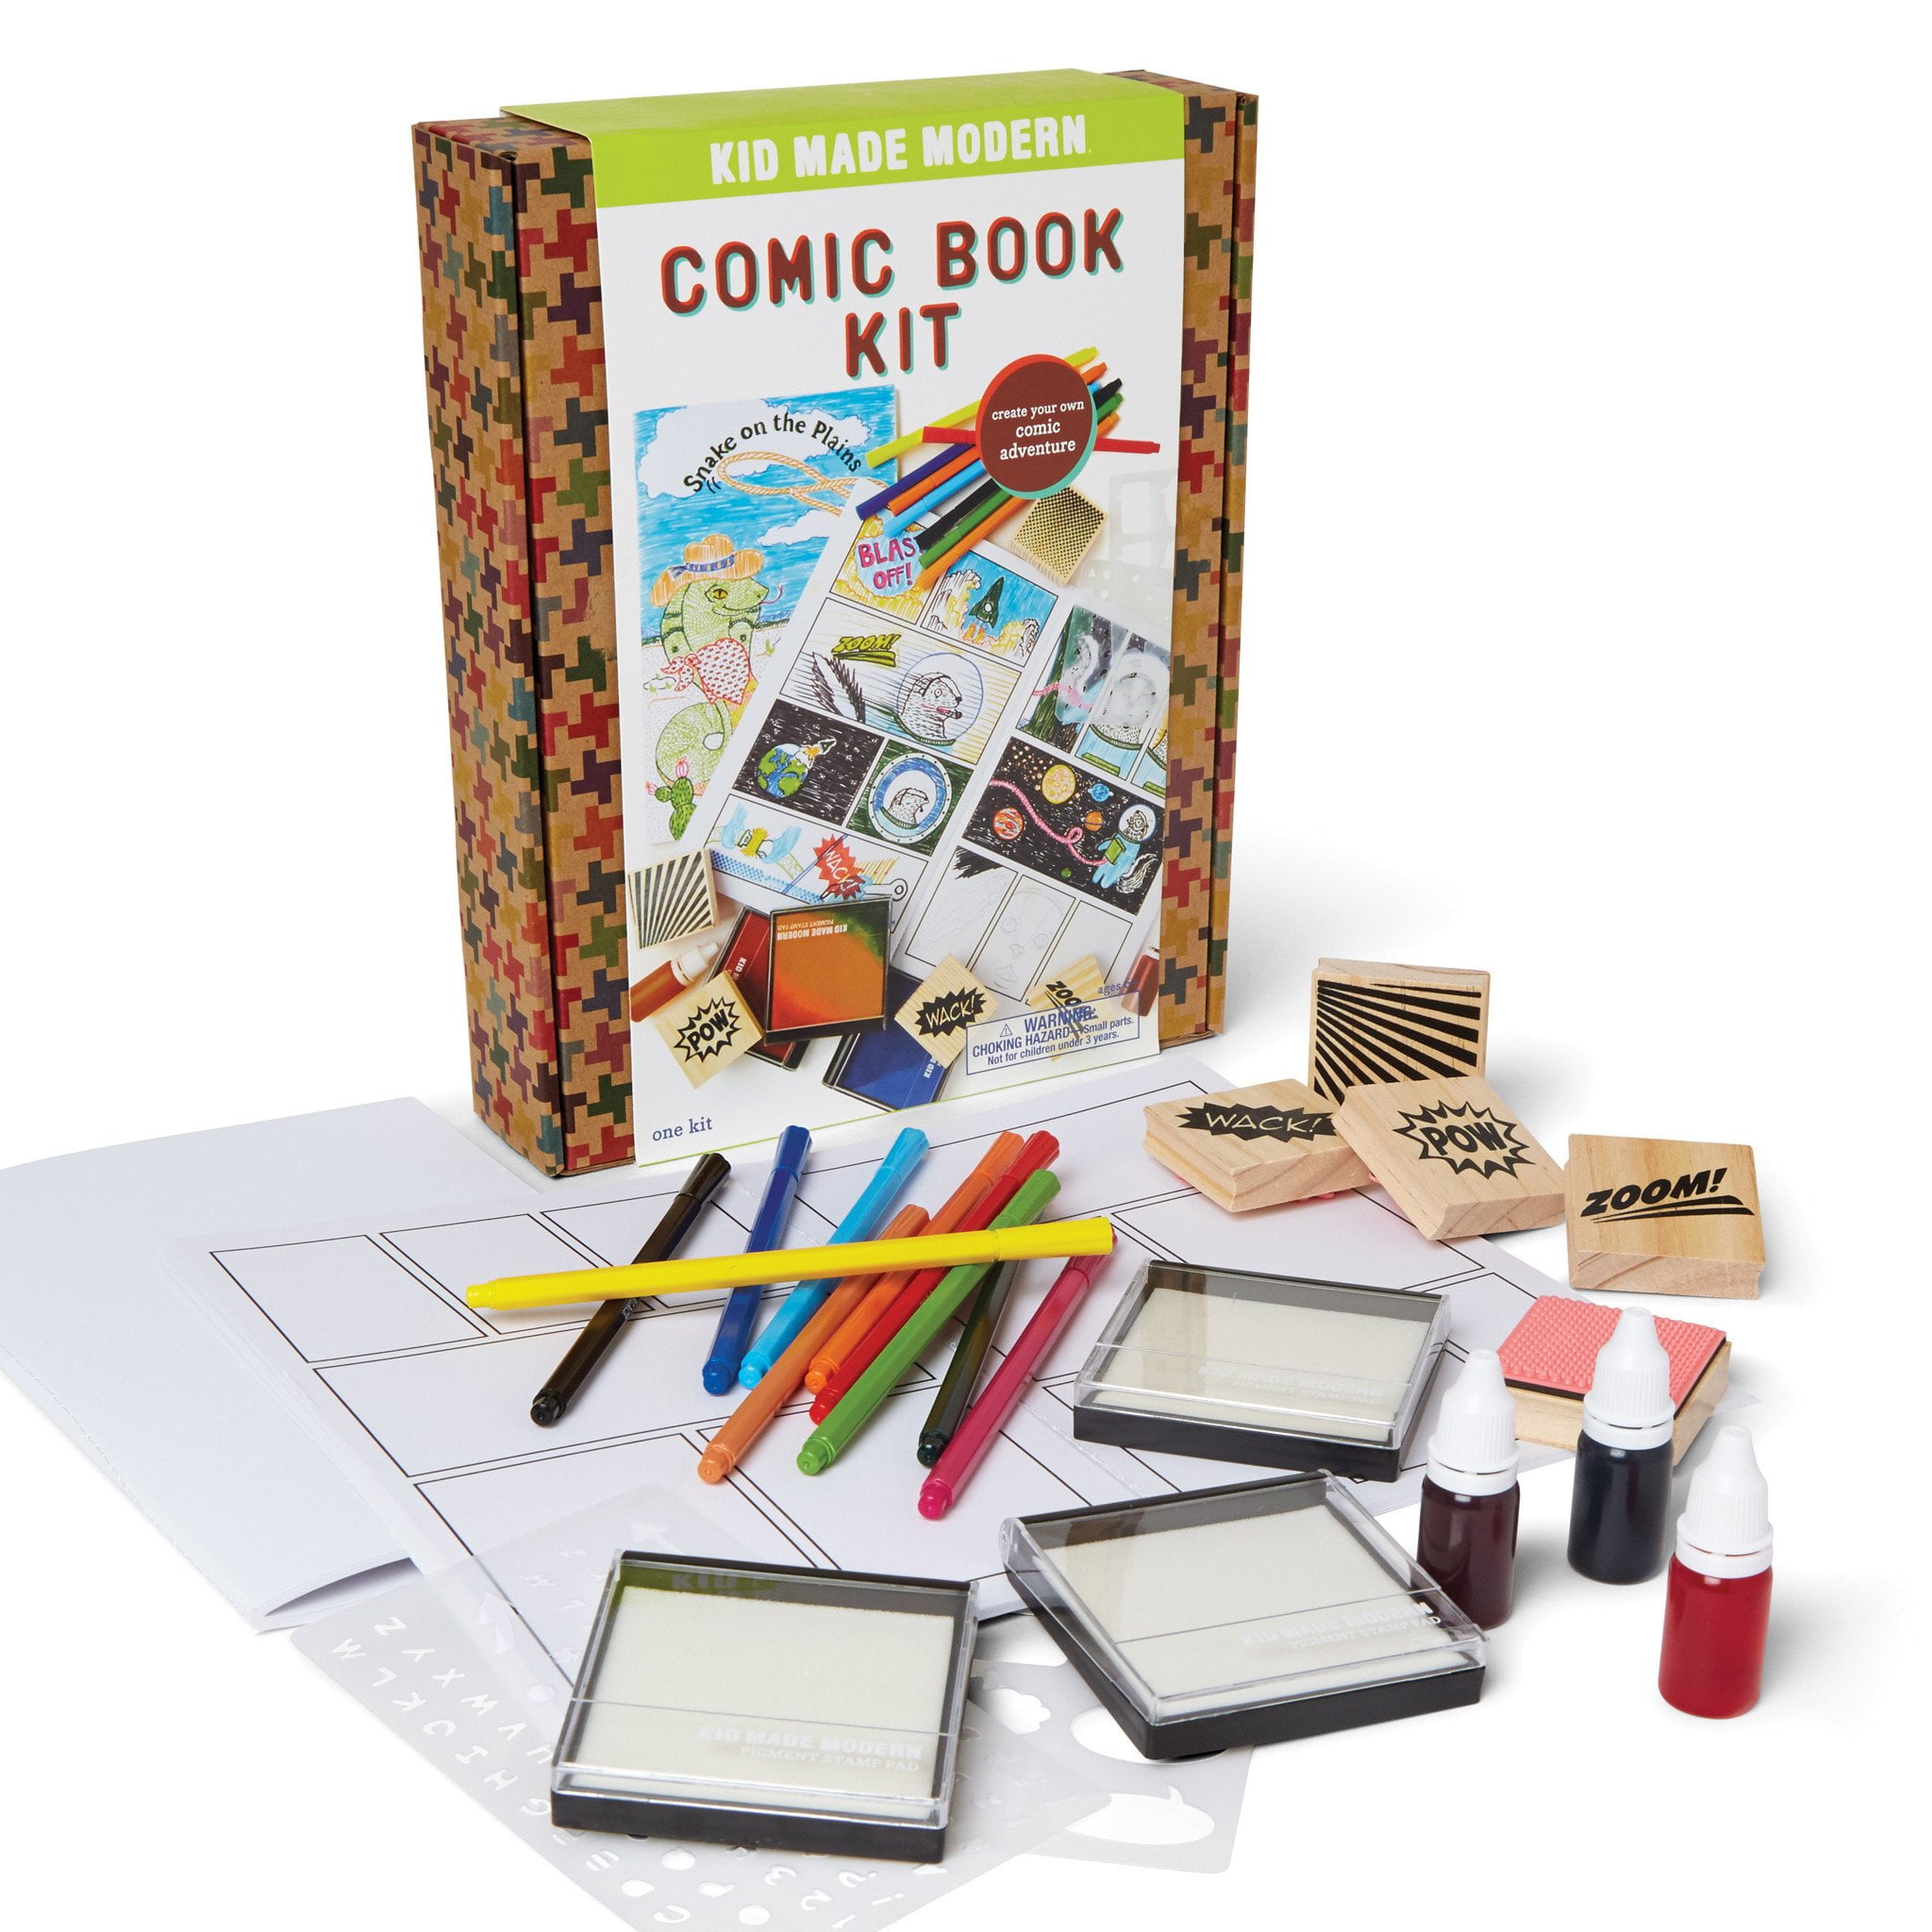 Kid Made Modern Create Your Own Comic Book Kit 